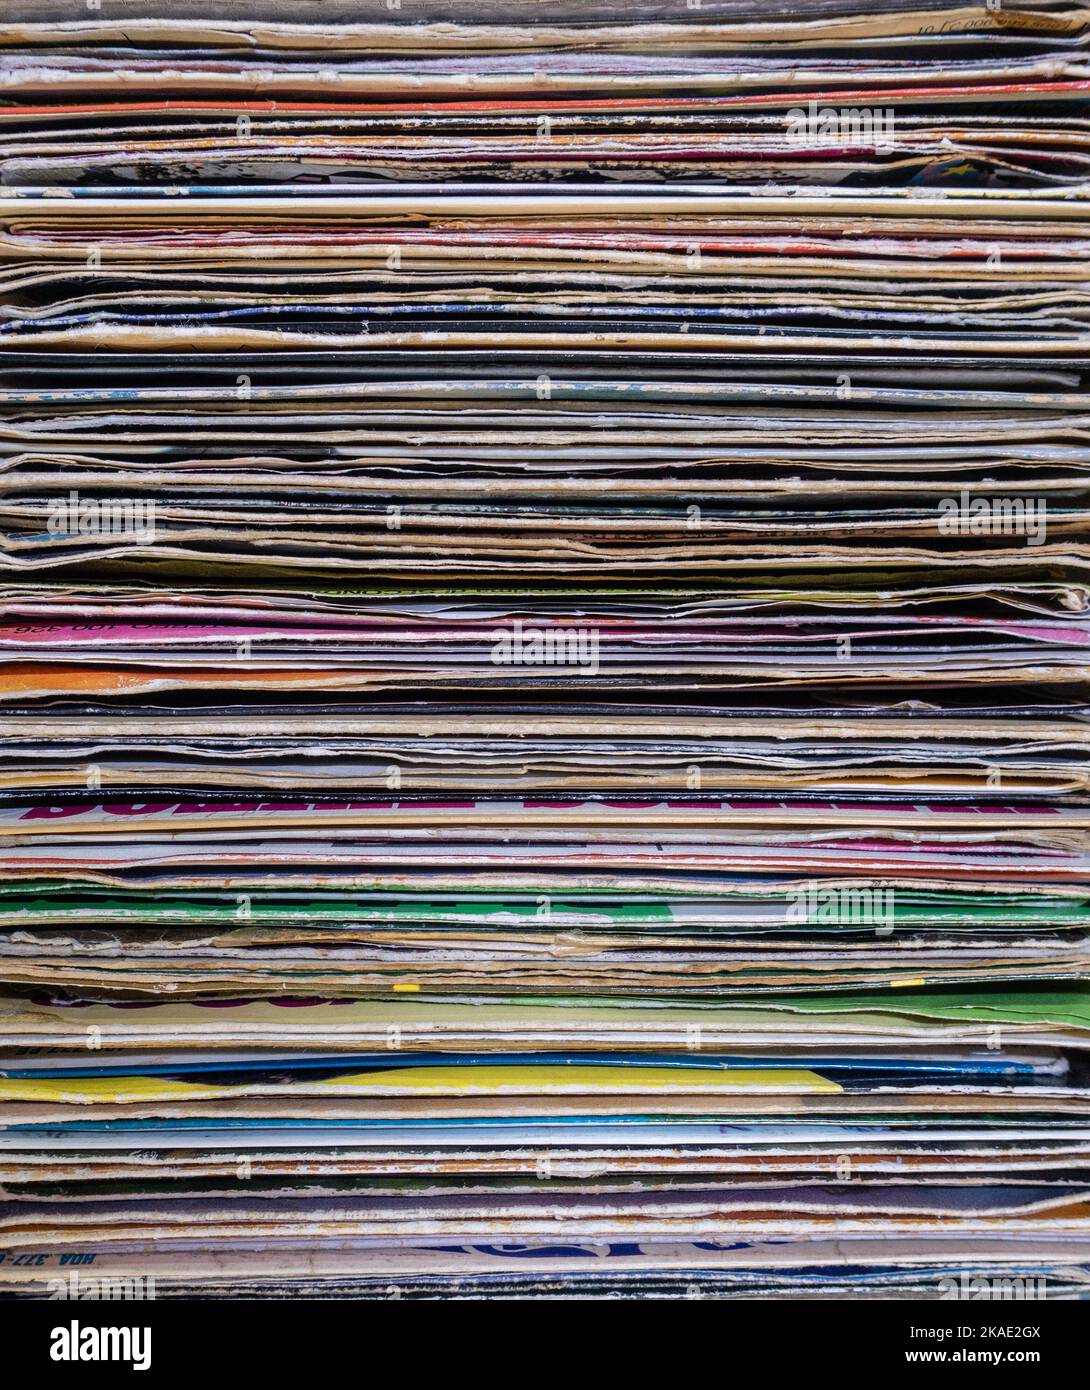 Stapel, Stapel von Vinyl-Singles Platten. Stockfoto